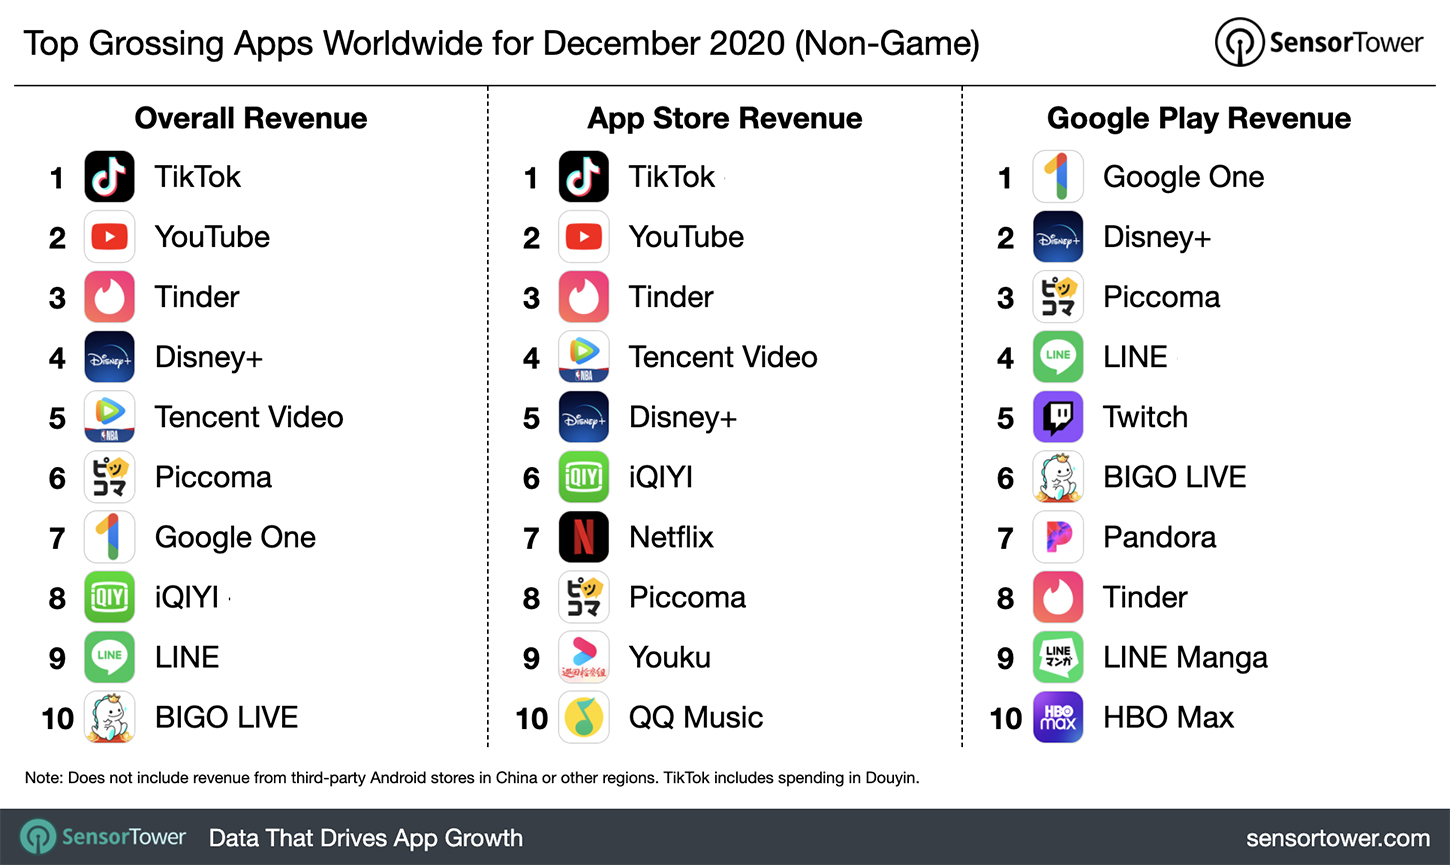 “Top Grossing Apps Worldwide for December 2020